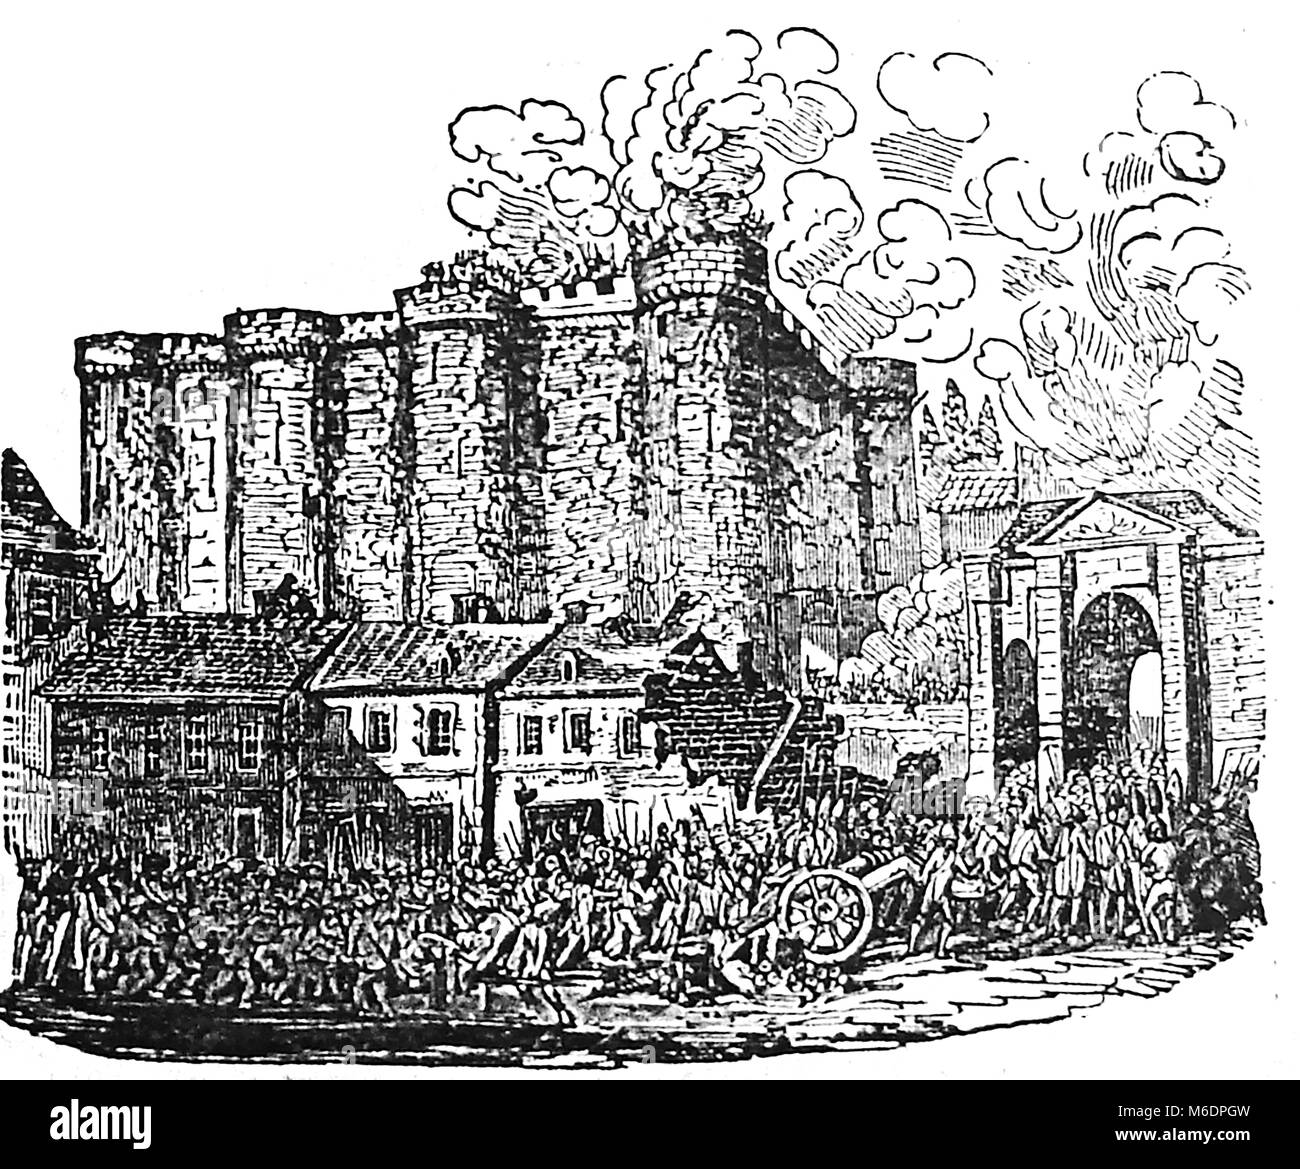 Sturm auf die Bastille, (prise de la Bastille) Paris, Frankreich, 14. Juli 1789 Stockfoto